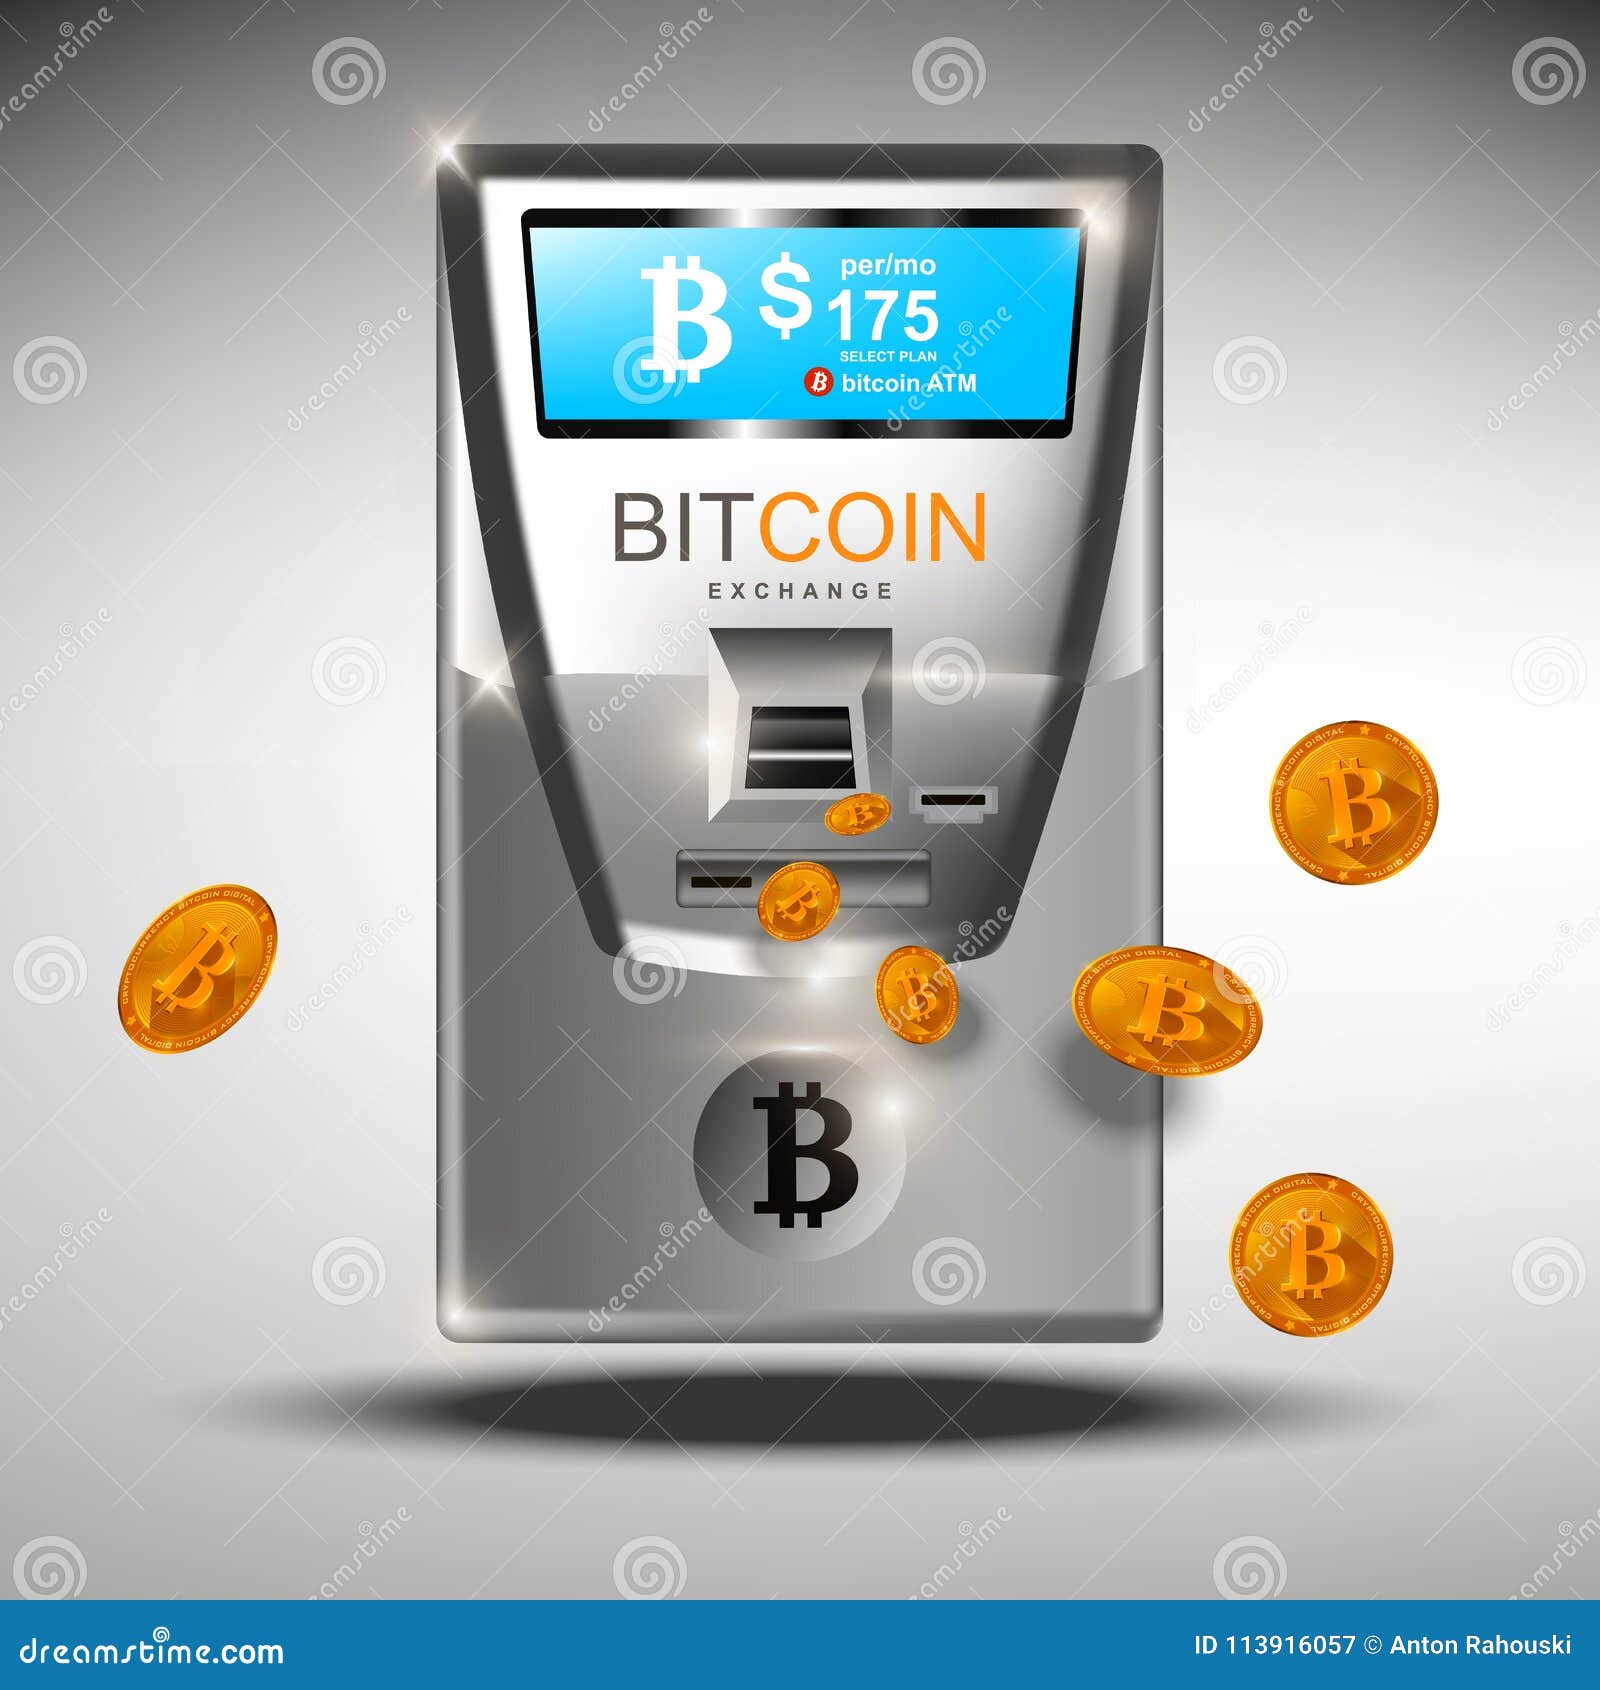 Bitcoin Atm Automated Machine Atm Bitcoins Cash Machine Vector - 